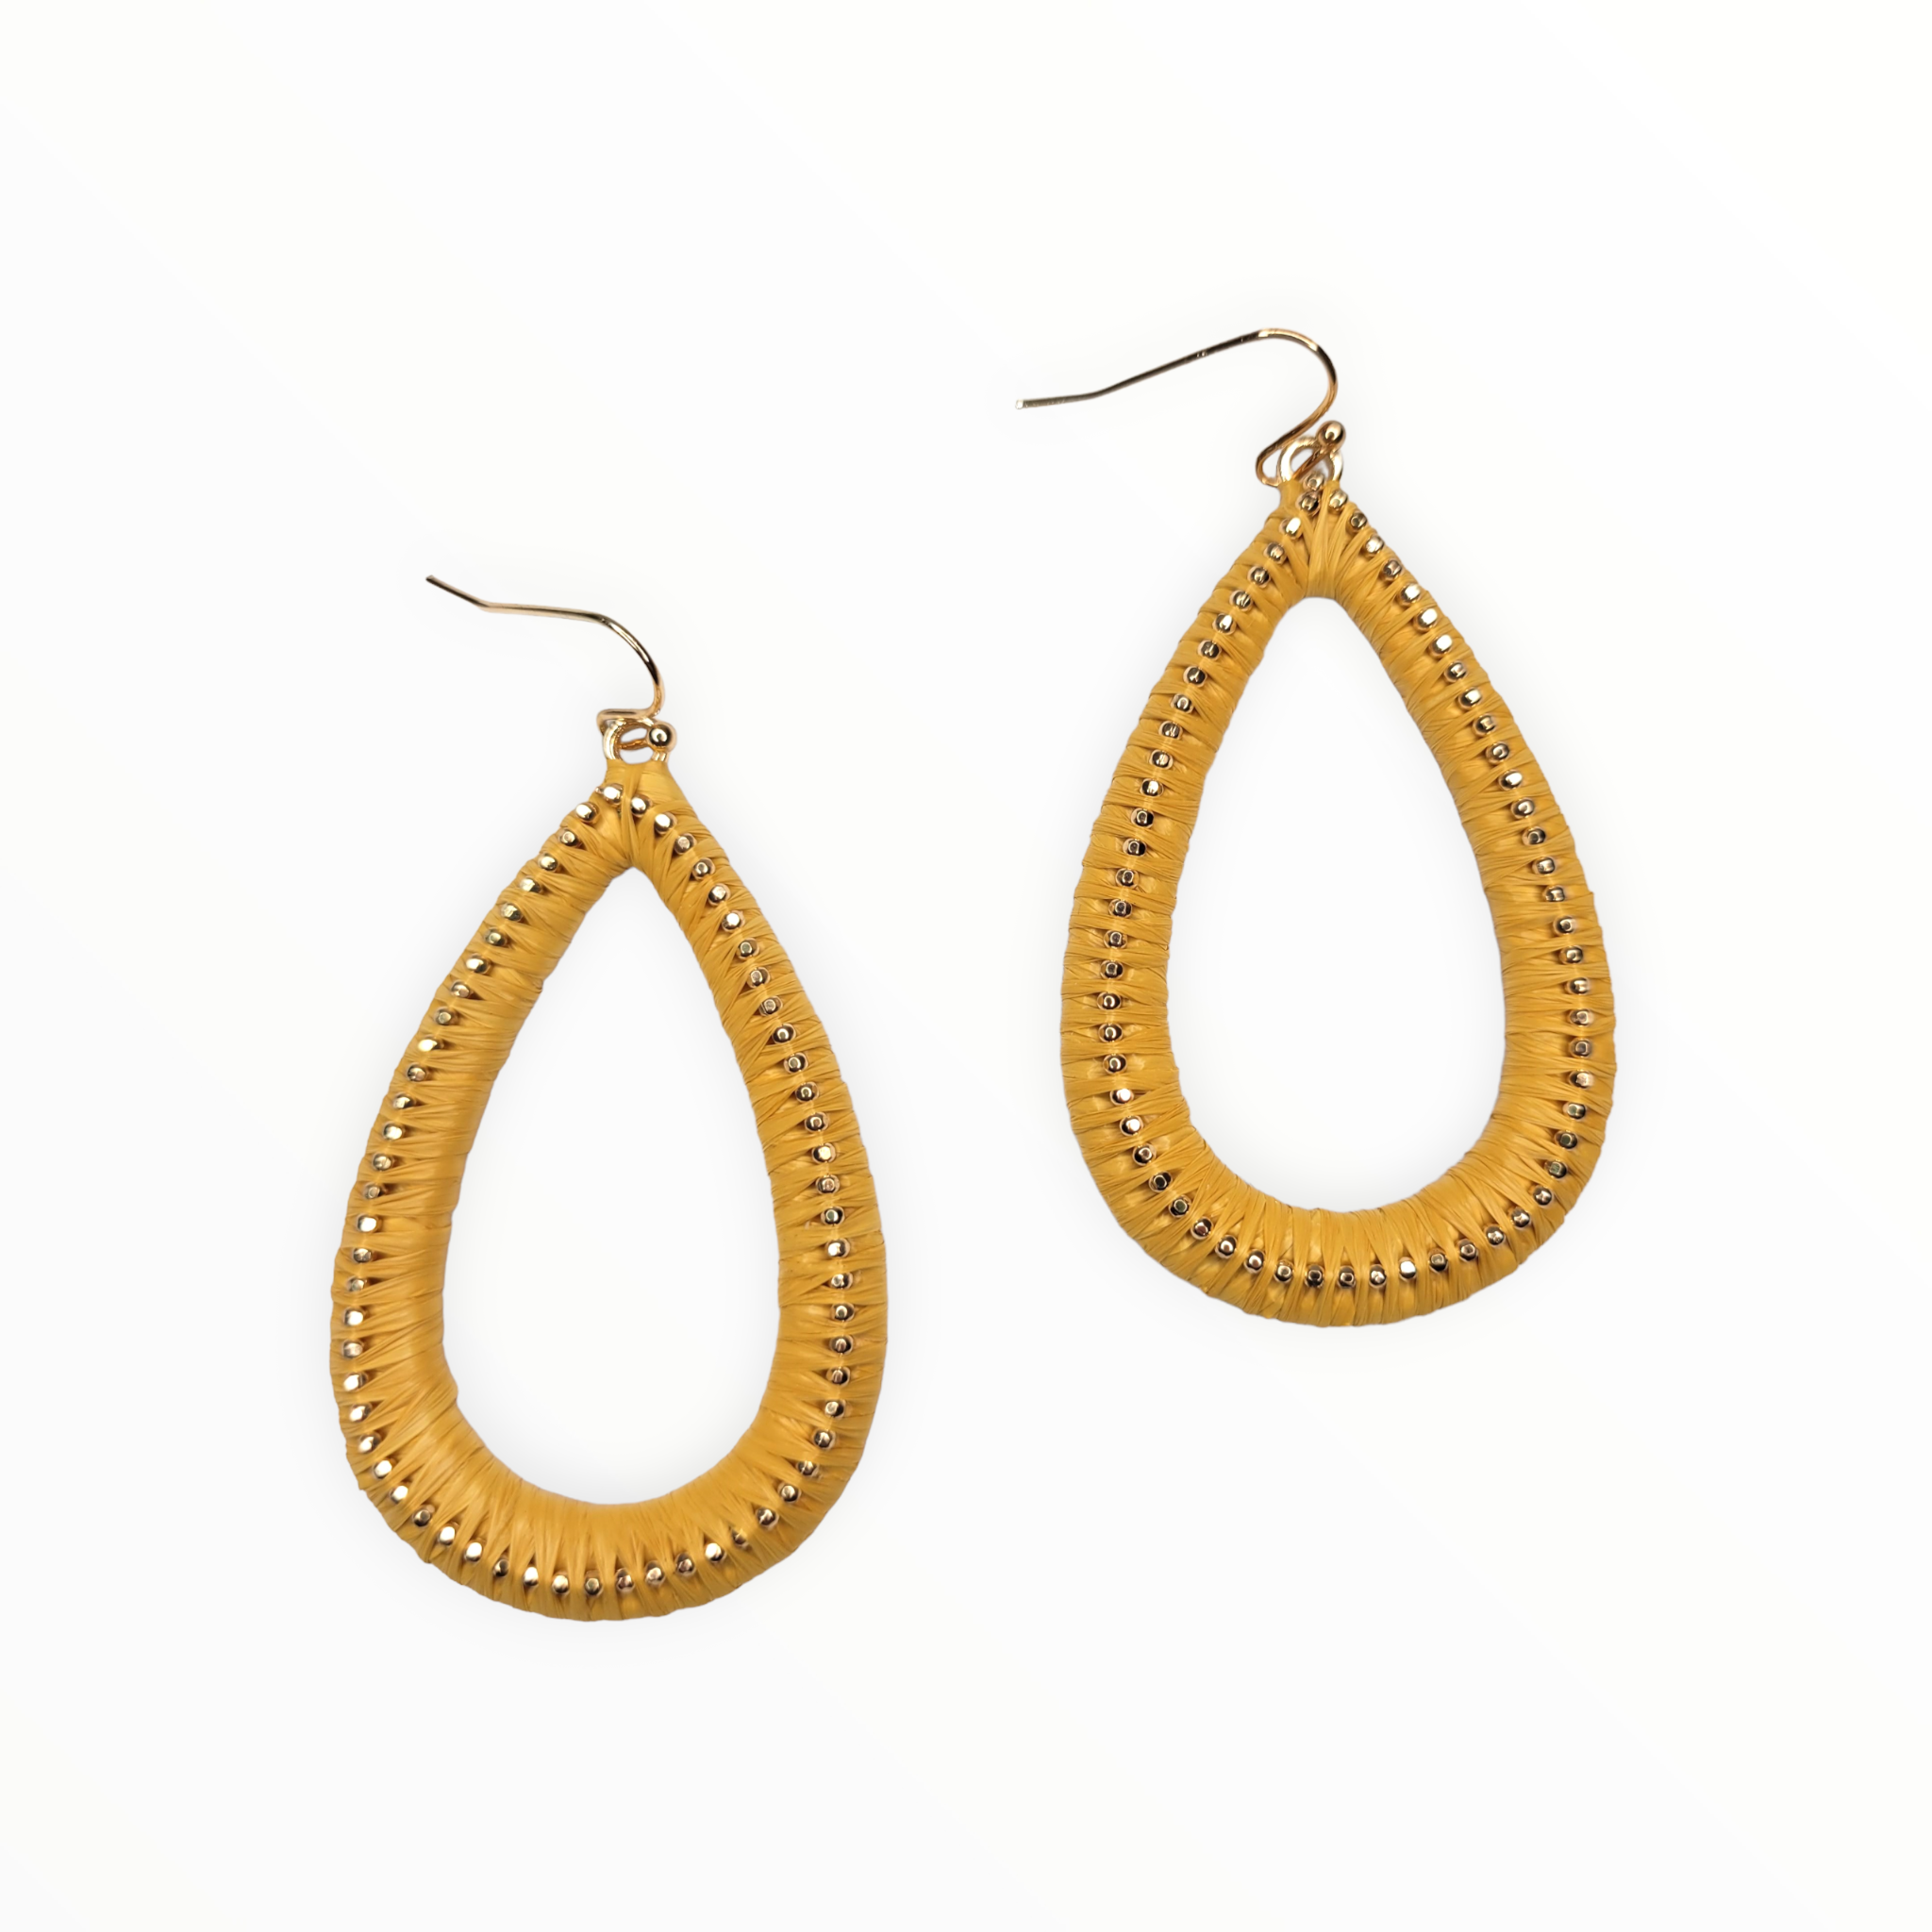 Mustard & Gold Teardrop Earrings-Earrings-louisgeorgeboutique-LouisGeorge Boutique, Women’s Fashion Boutique Located in Trussville, Alabama